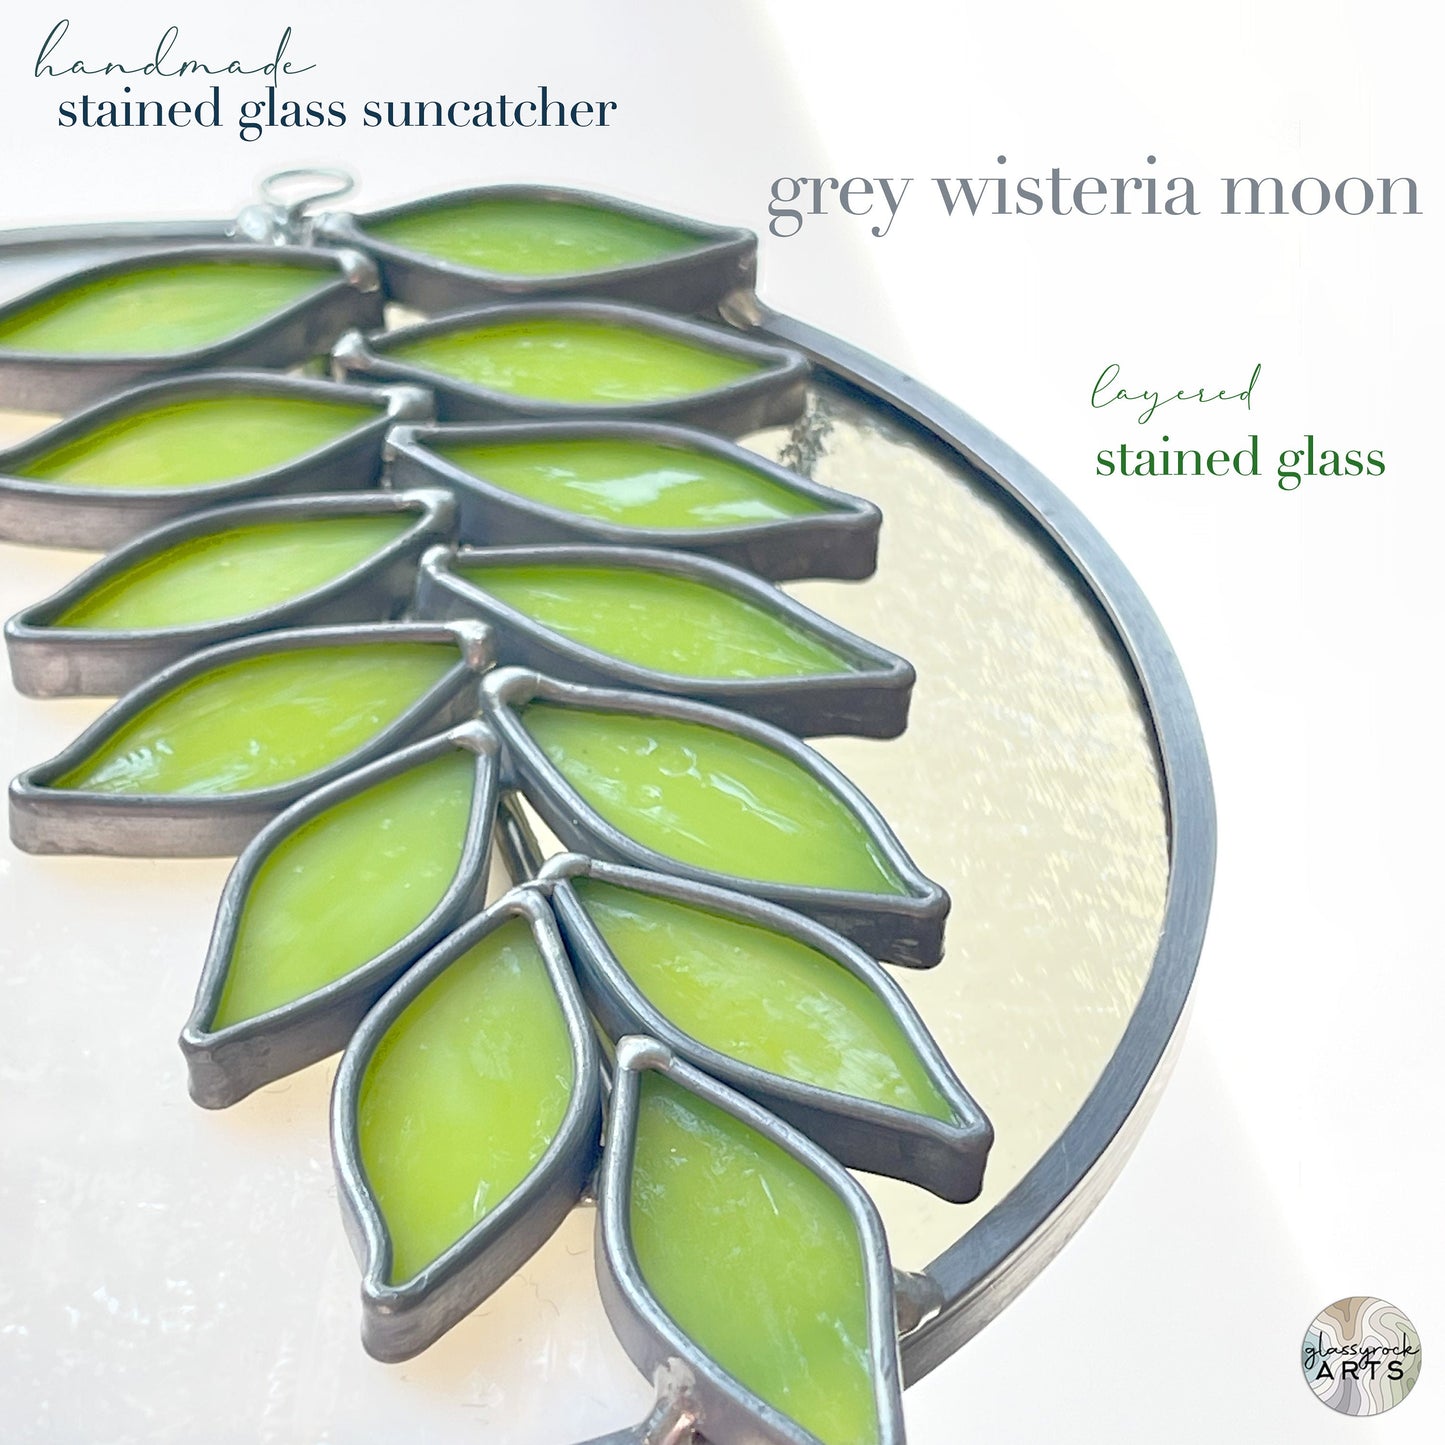 Handmade Full Moon Wisteria Stained Glass Suncatcher, handmade stained glass gift with free shipping, full moon decor, gift for plant lover